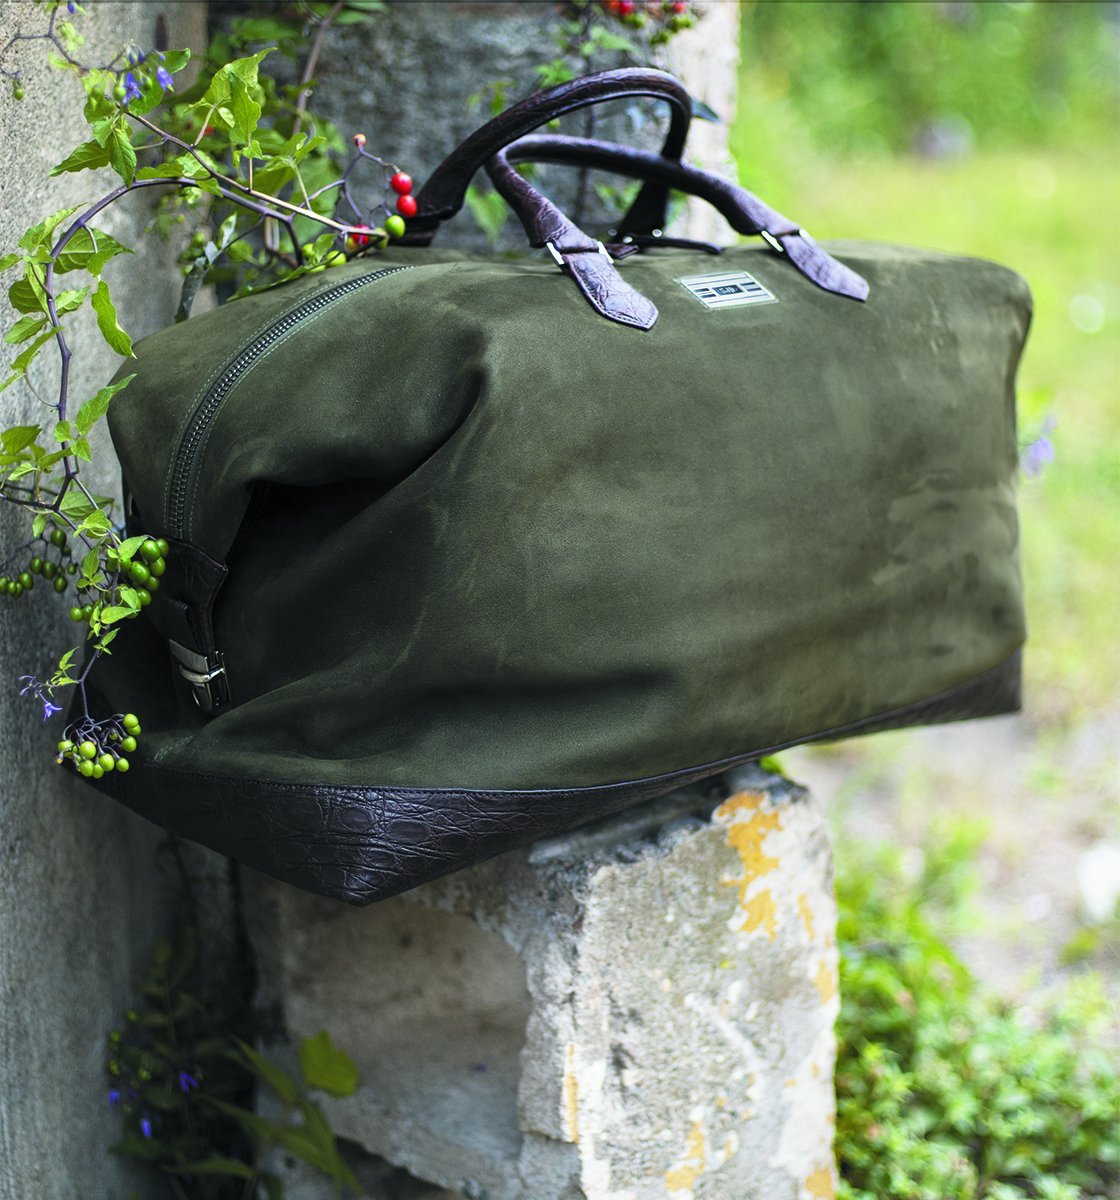 Green suede Aspen travel bag on a concrete pillar -Darby Scott